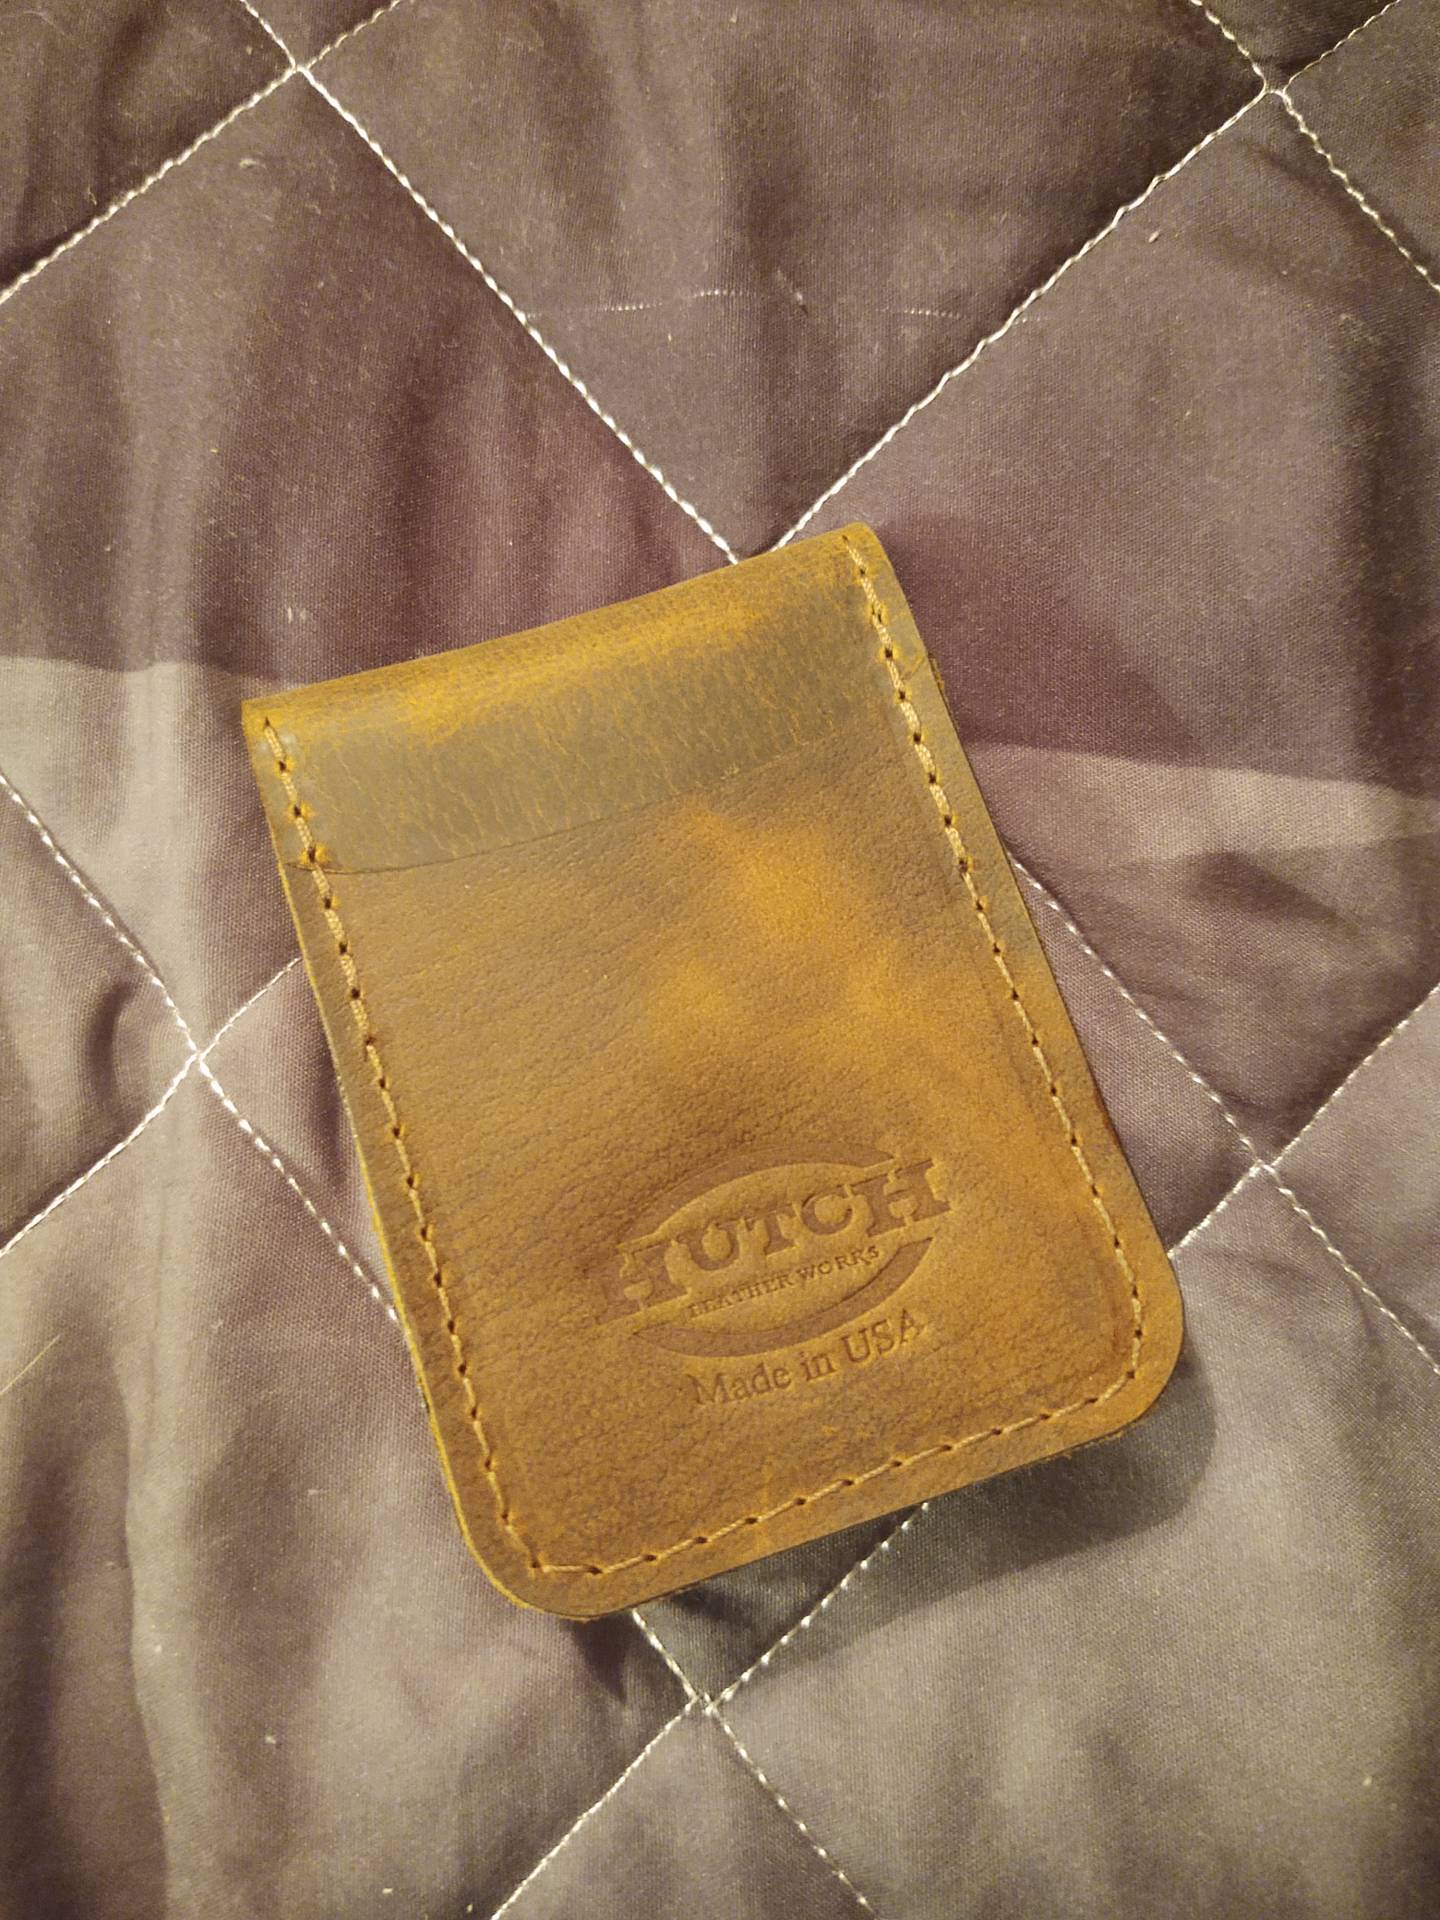 Louisiana Ragin' Cajuns Personalized Front Pocket Wallet - Brown